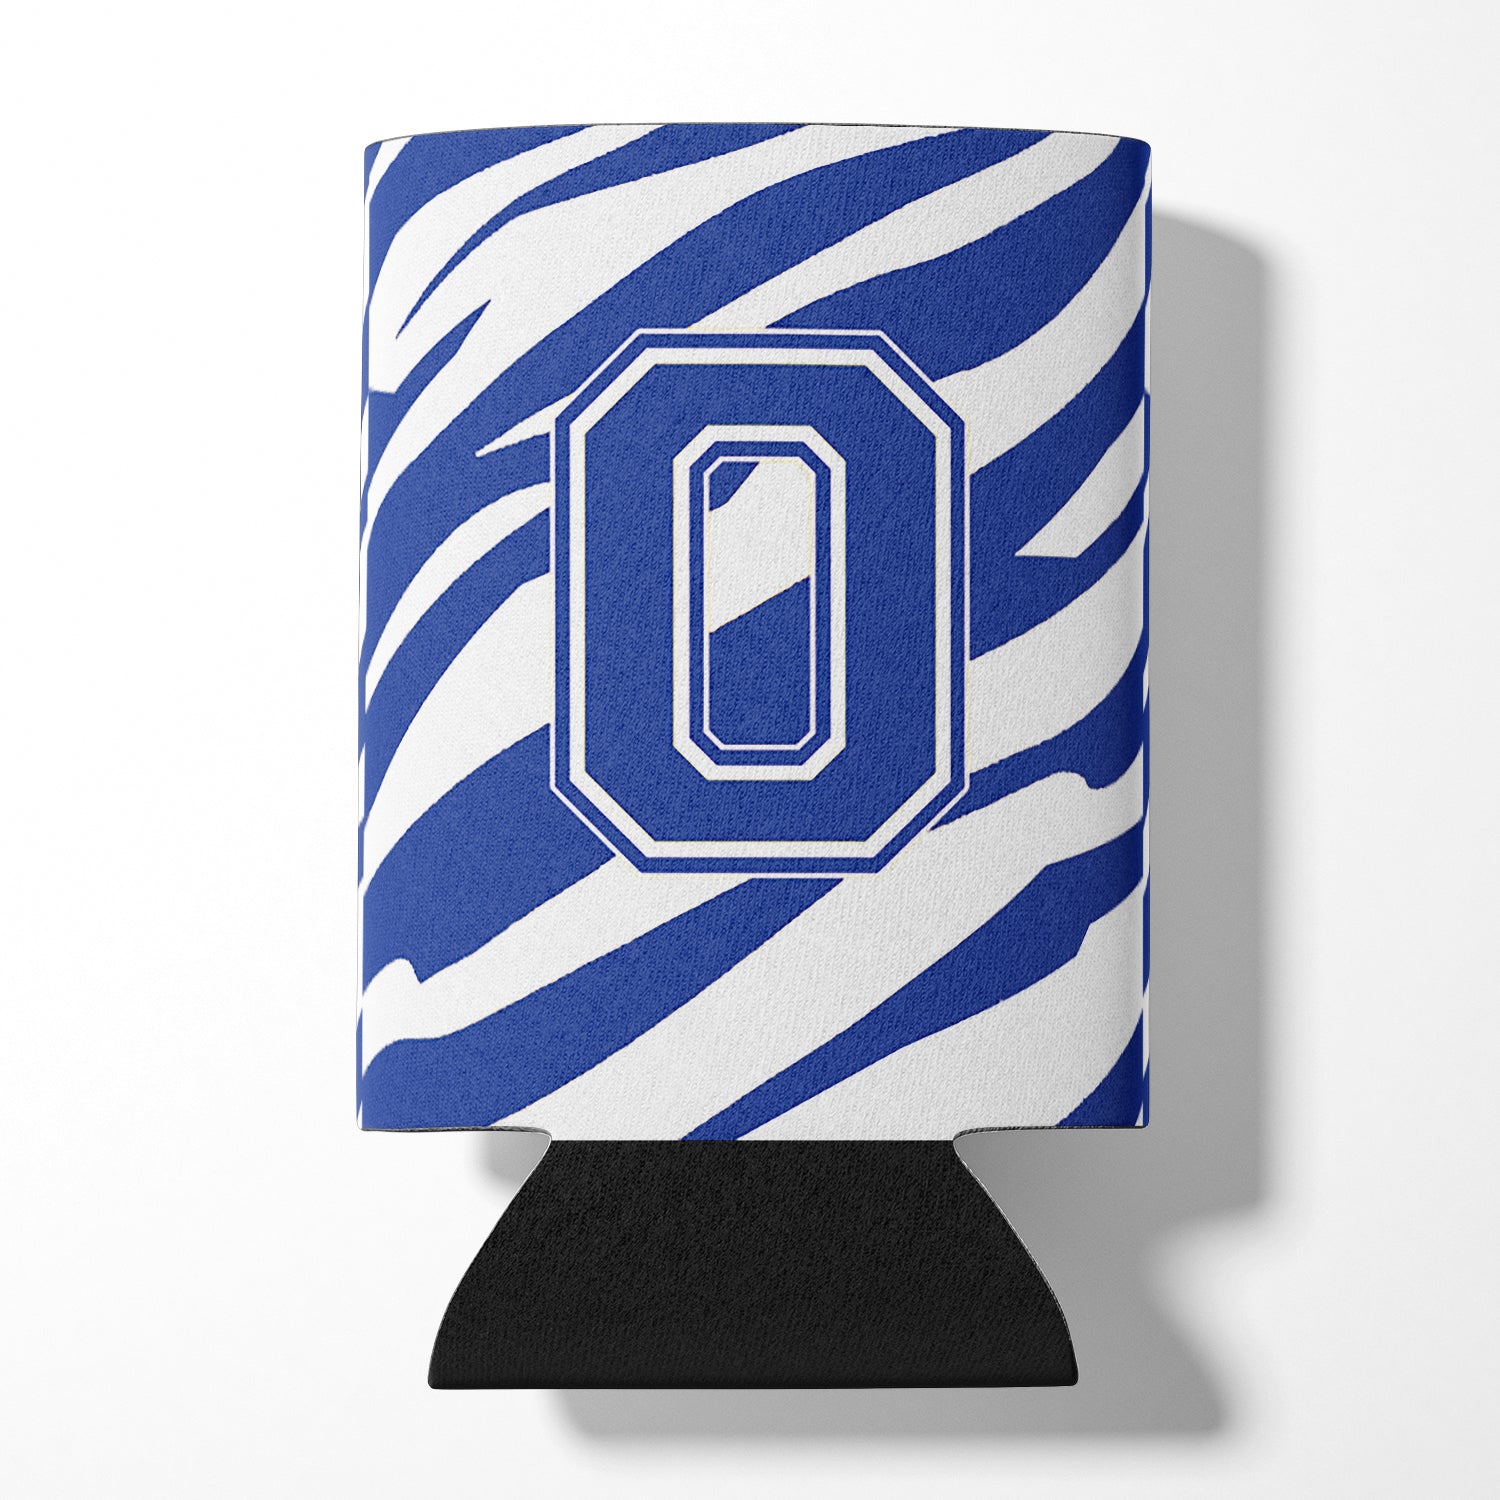 Monogramme initial de la lettre O - Tiger Stripe Blue and White Can Beverage Insulator Hugger